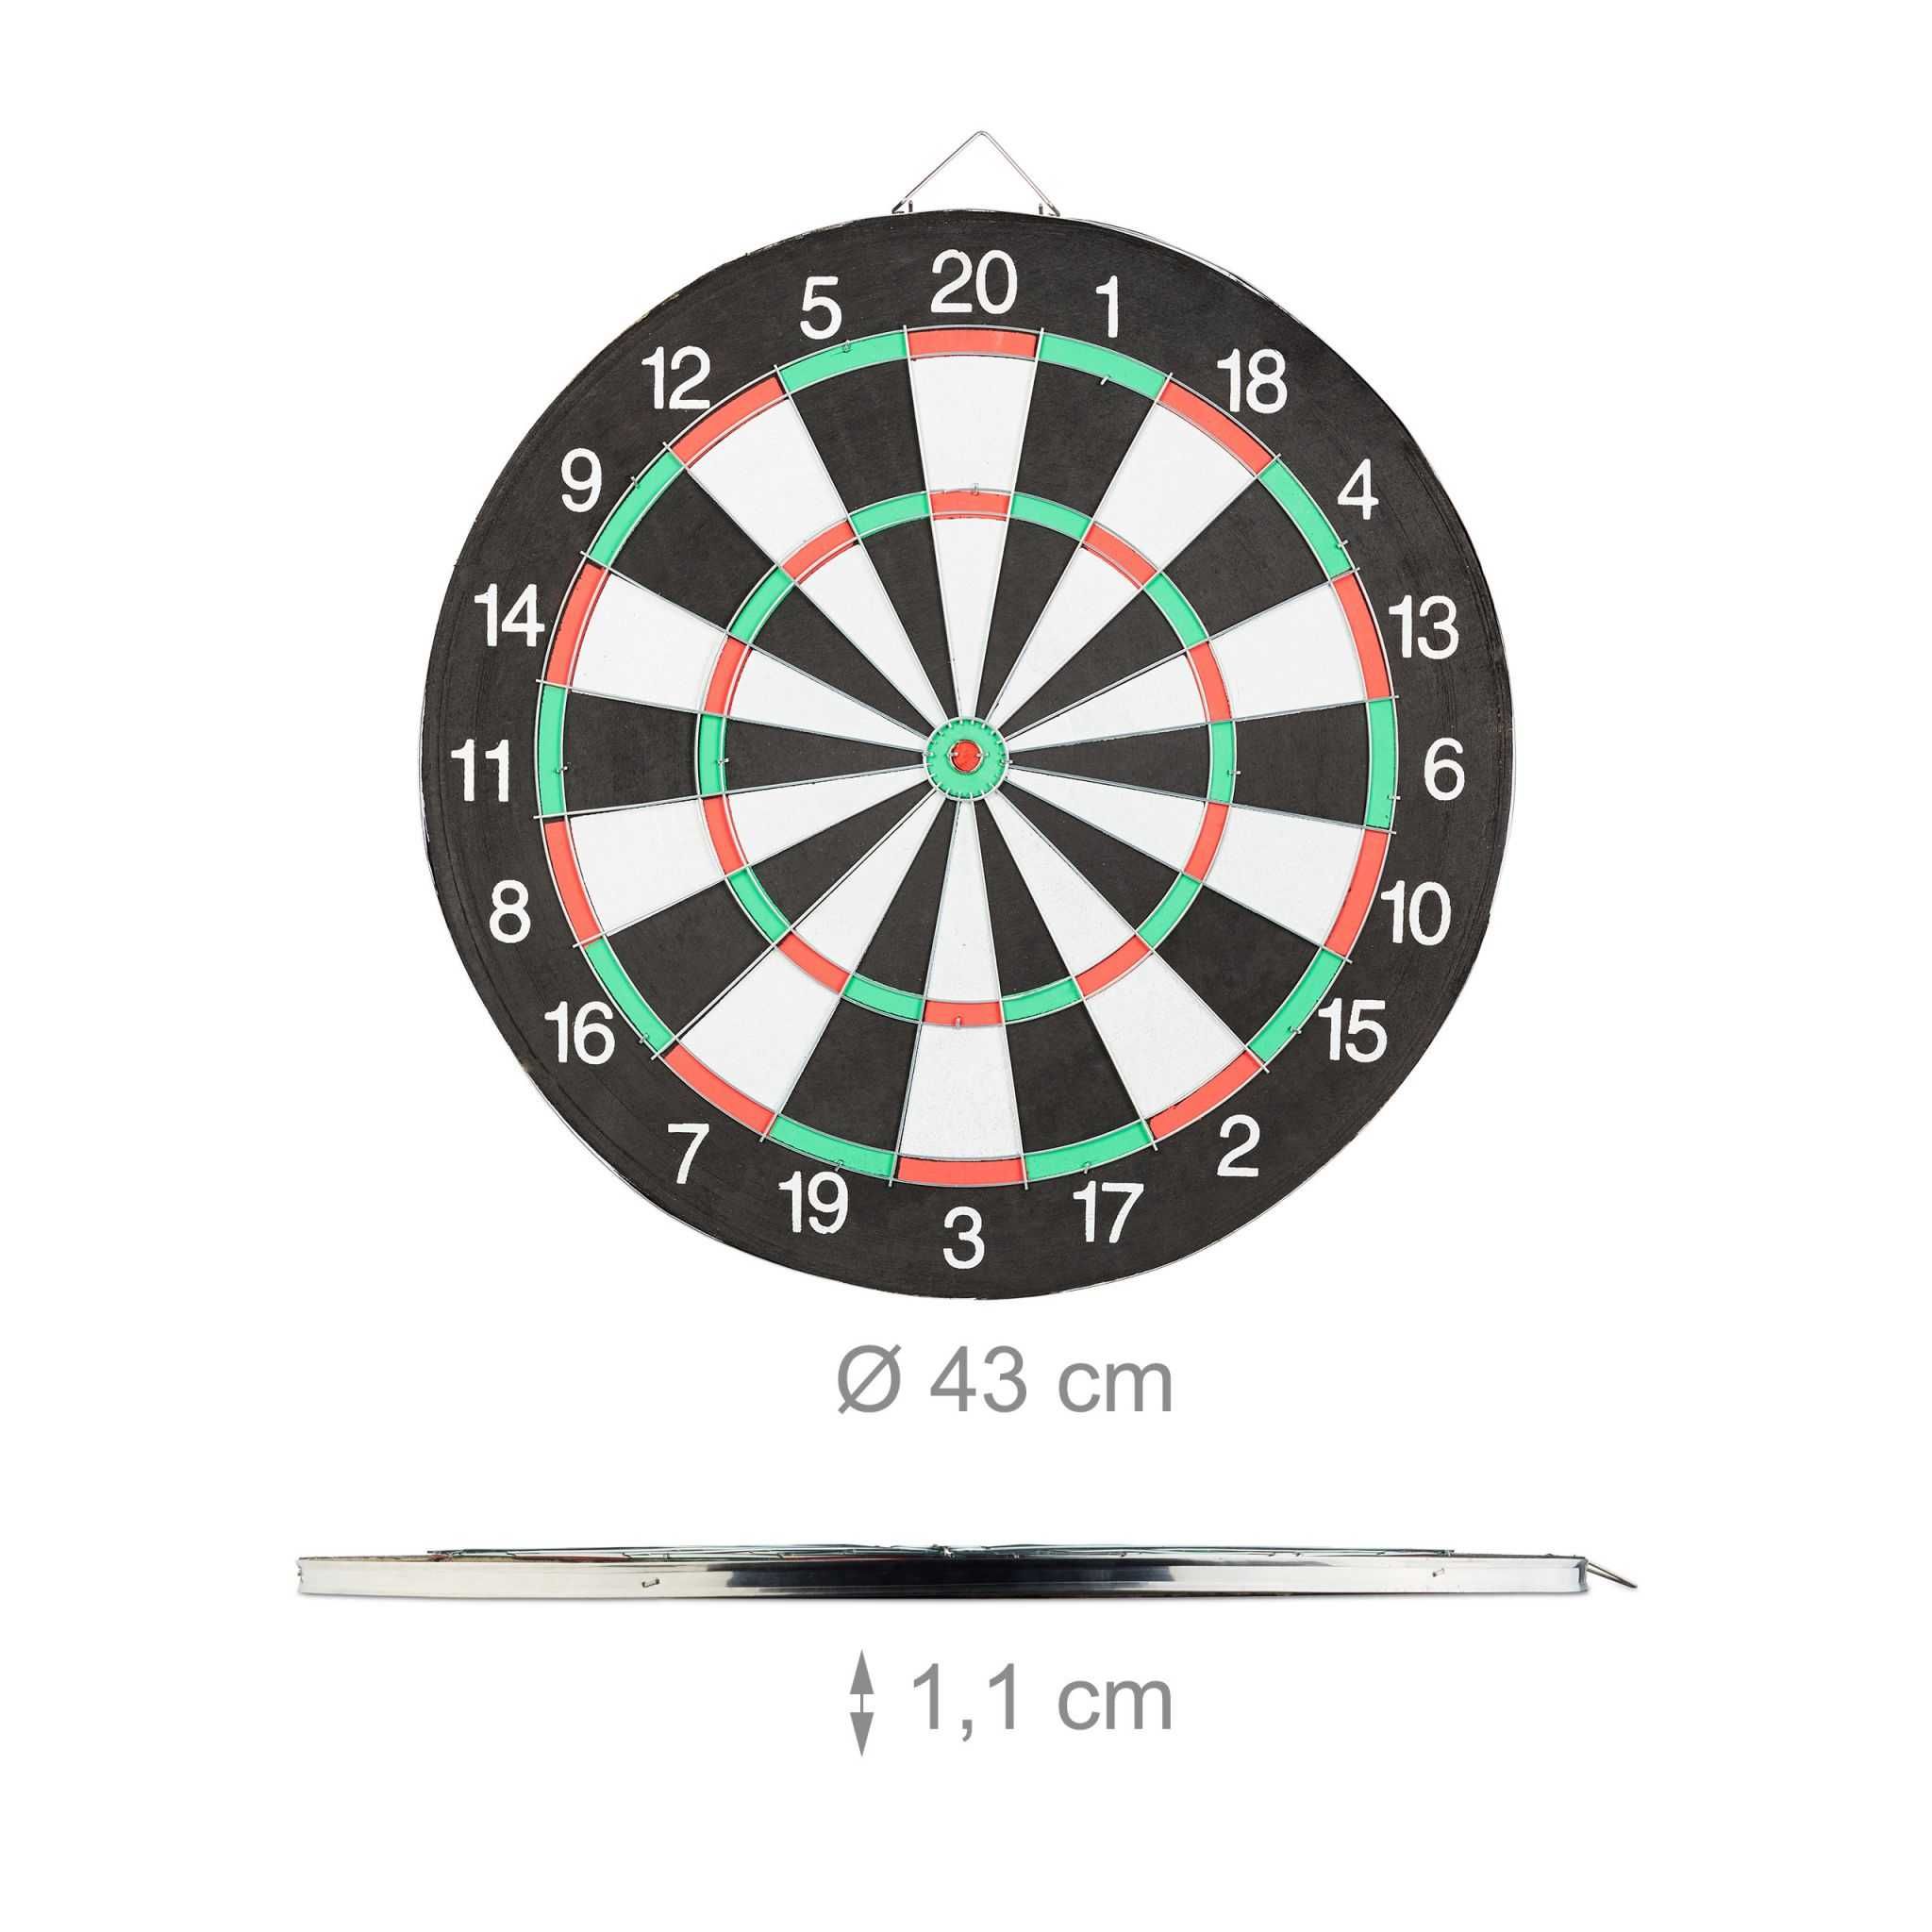 Set darts 43 cm cu 6 sageti cu varf metalic doua fete in design clasic